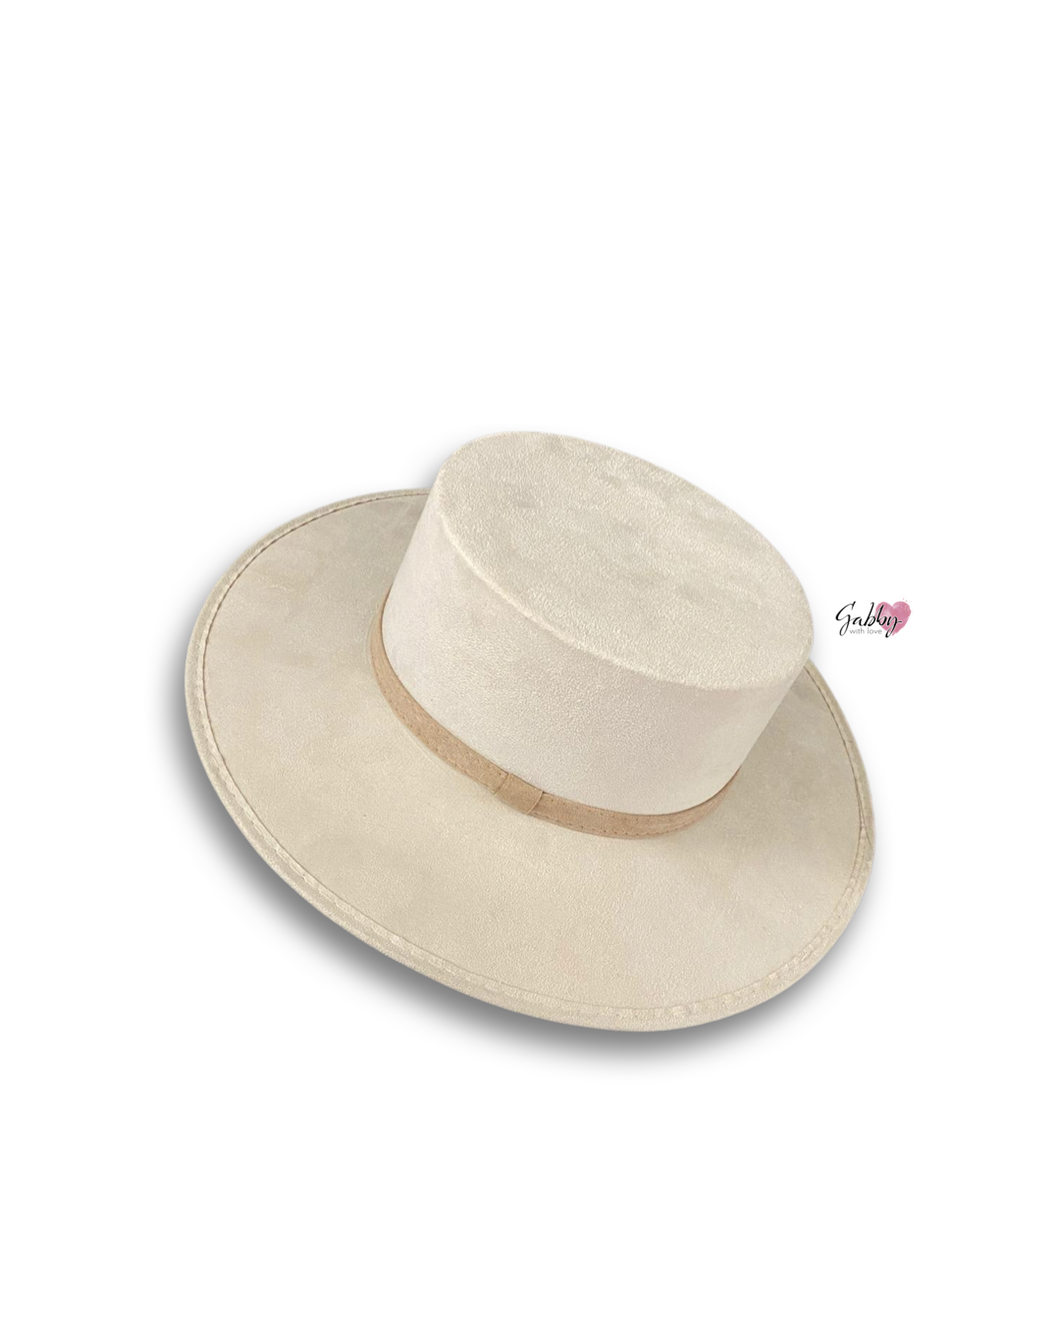 Pearl White (Boater) Sombrero